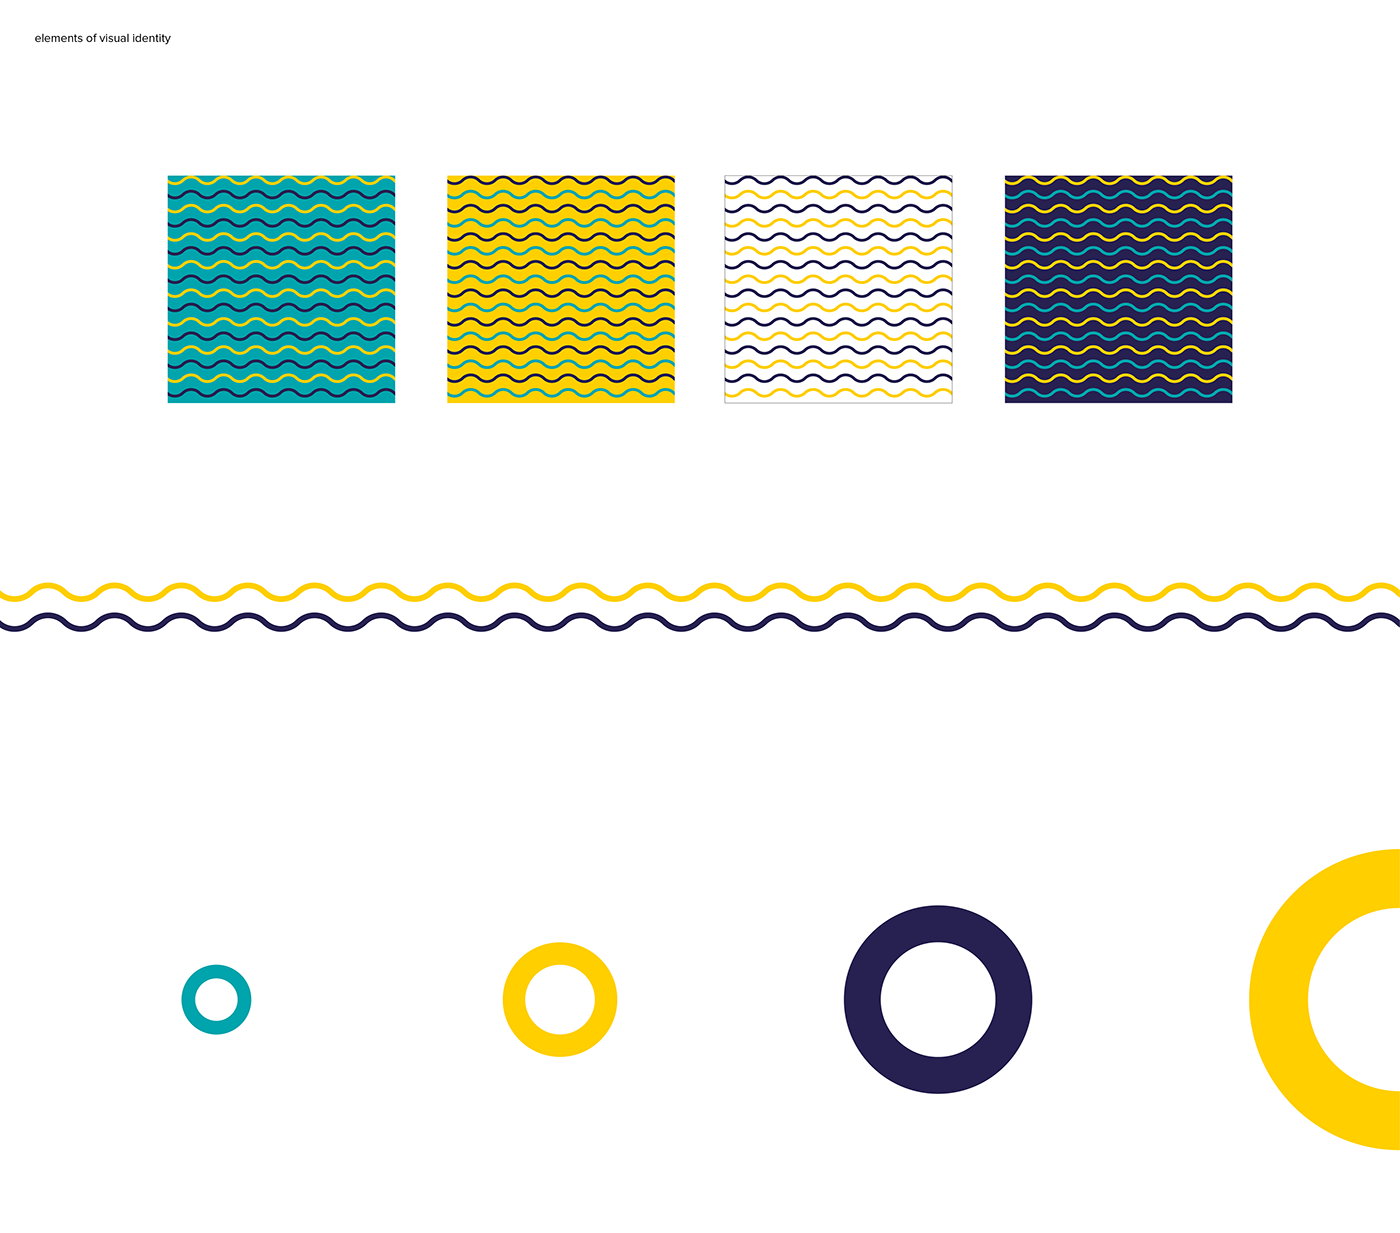 #rebranding #visualidentity  #mockup #Logo #Design #Sea #resort #website #icons